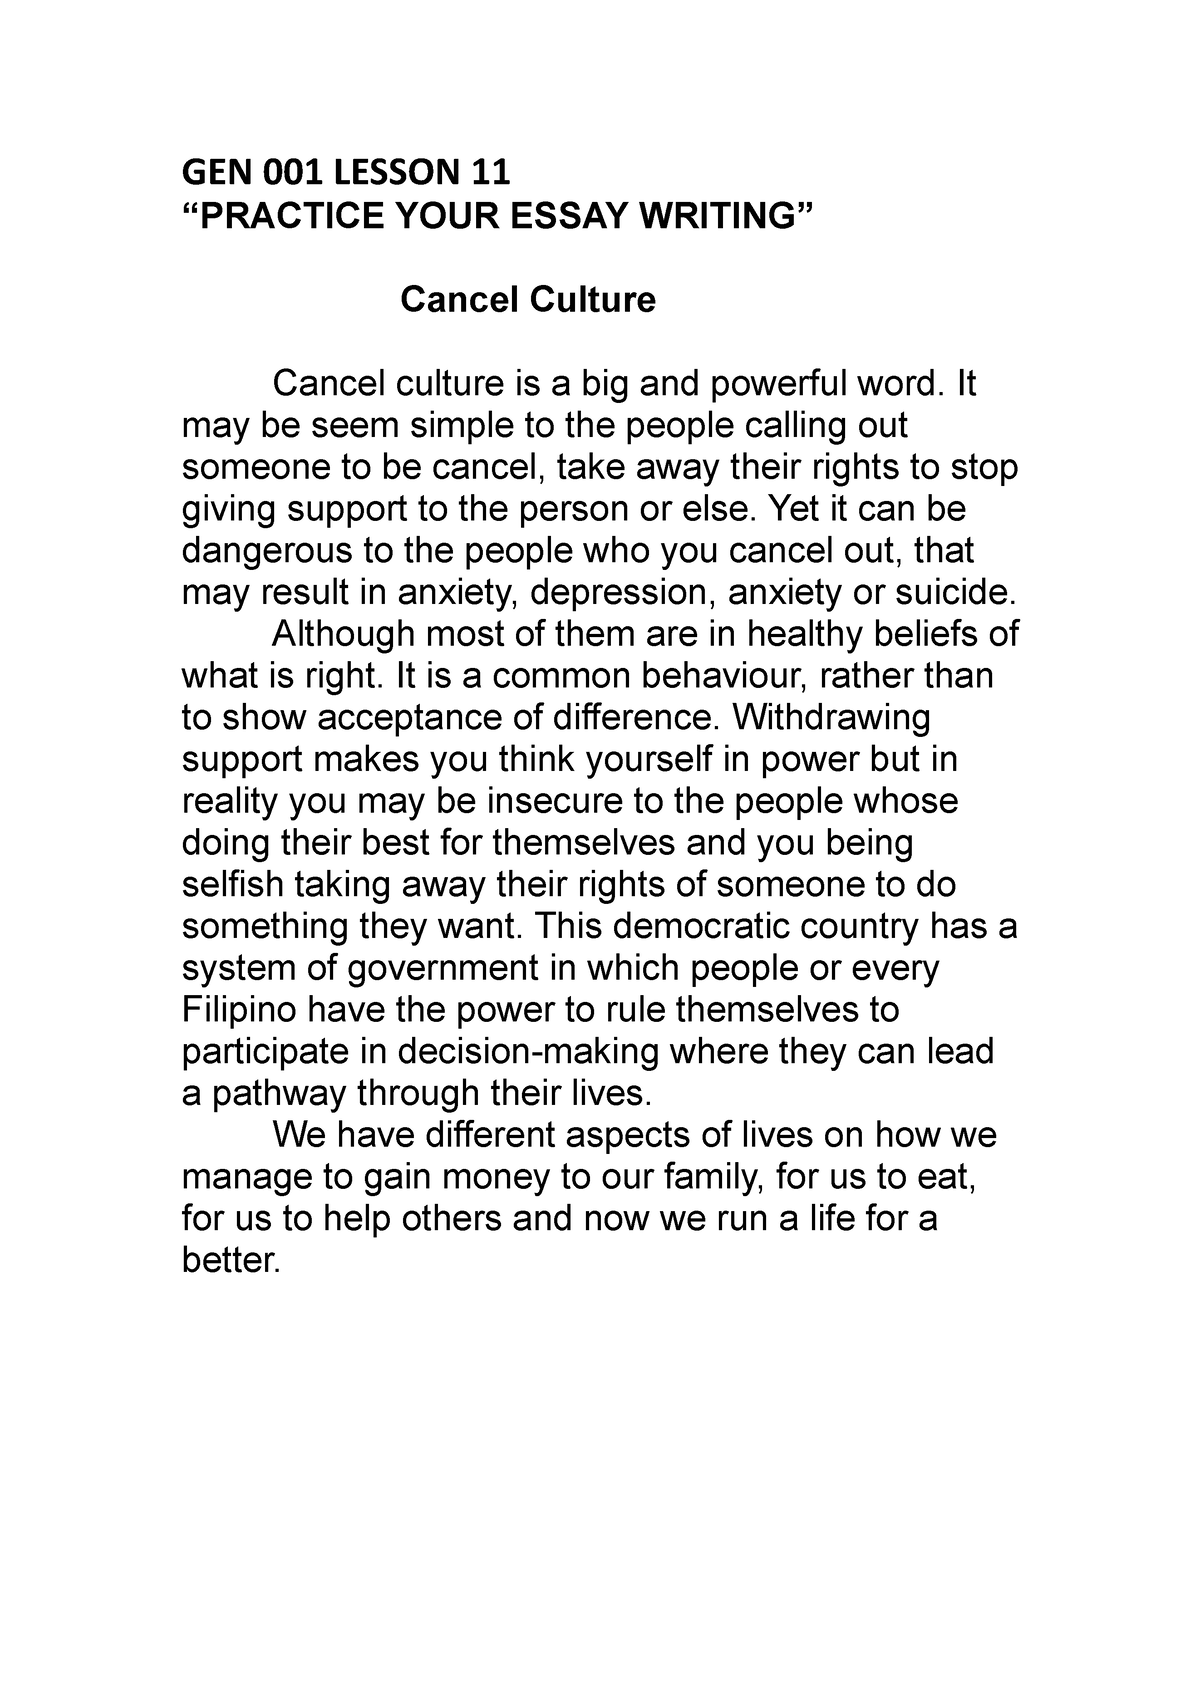 titles for cancel culture essay